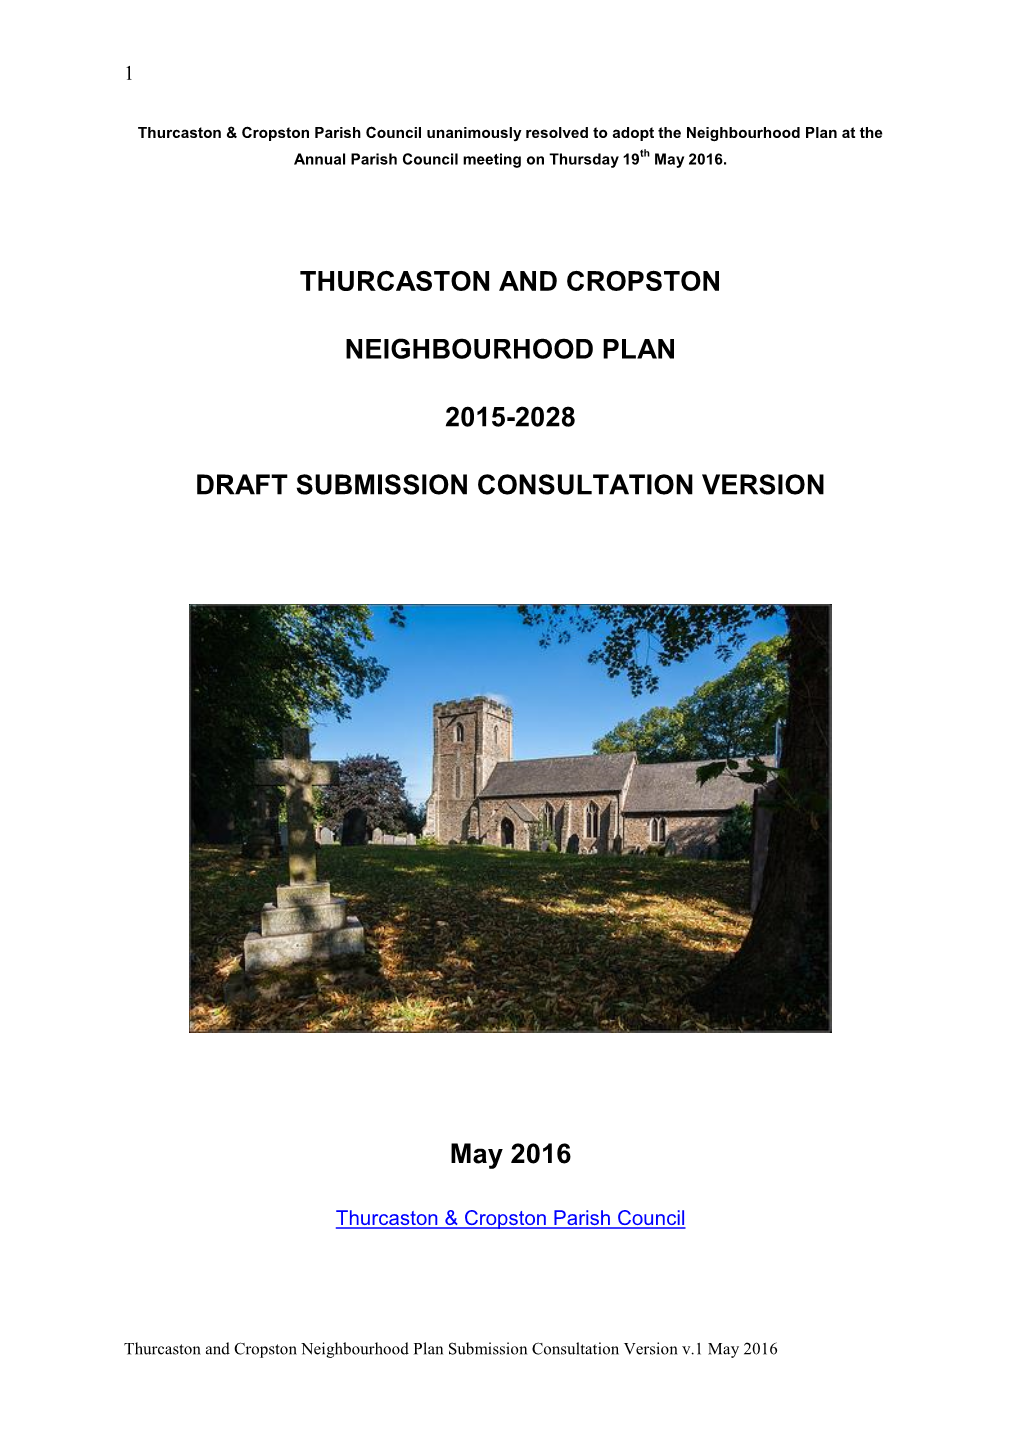 01 Thurcaston and Cropston Neighbourhood Plan Submission